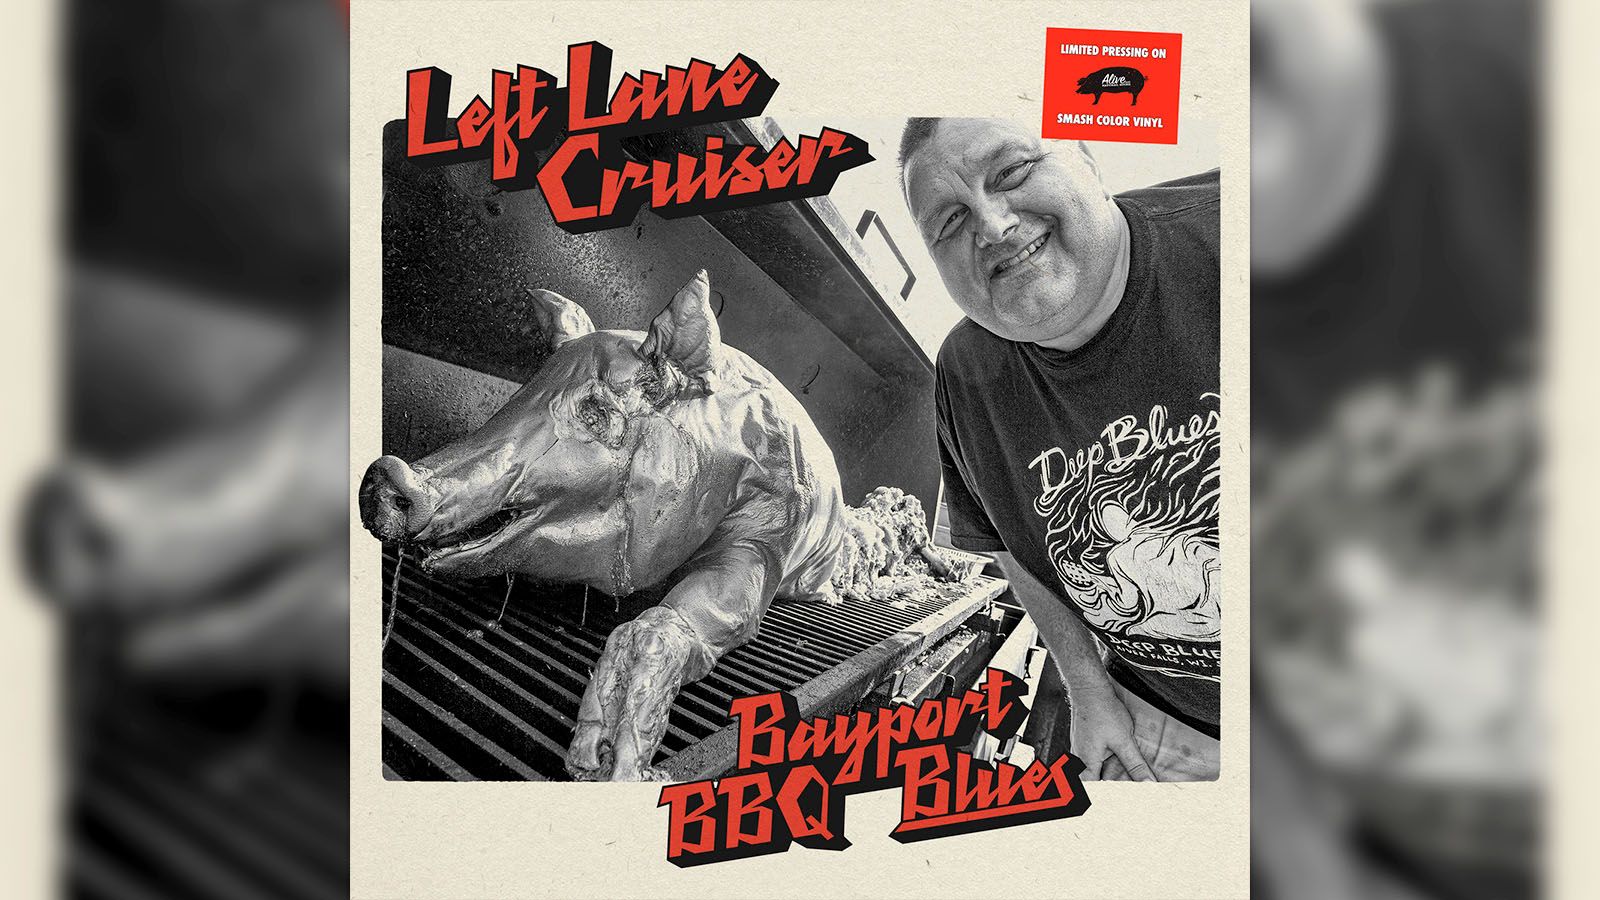 'Bayport BBQ Blues' is the latest effort from Fort Wayne's Left Lane Cruiser.